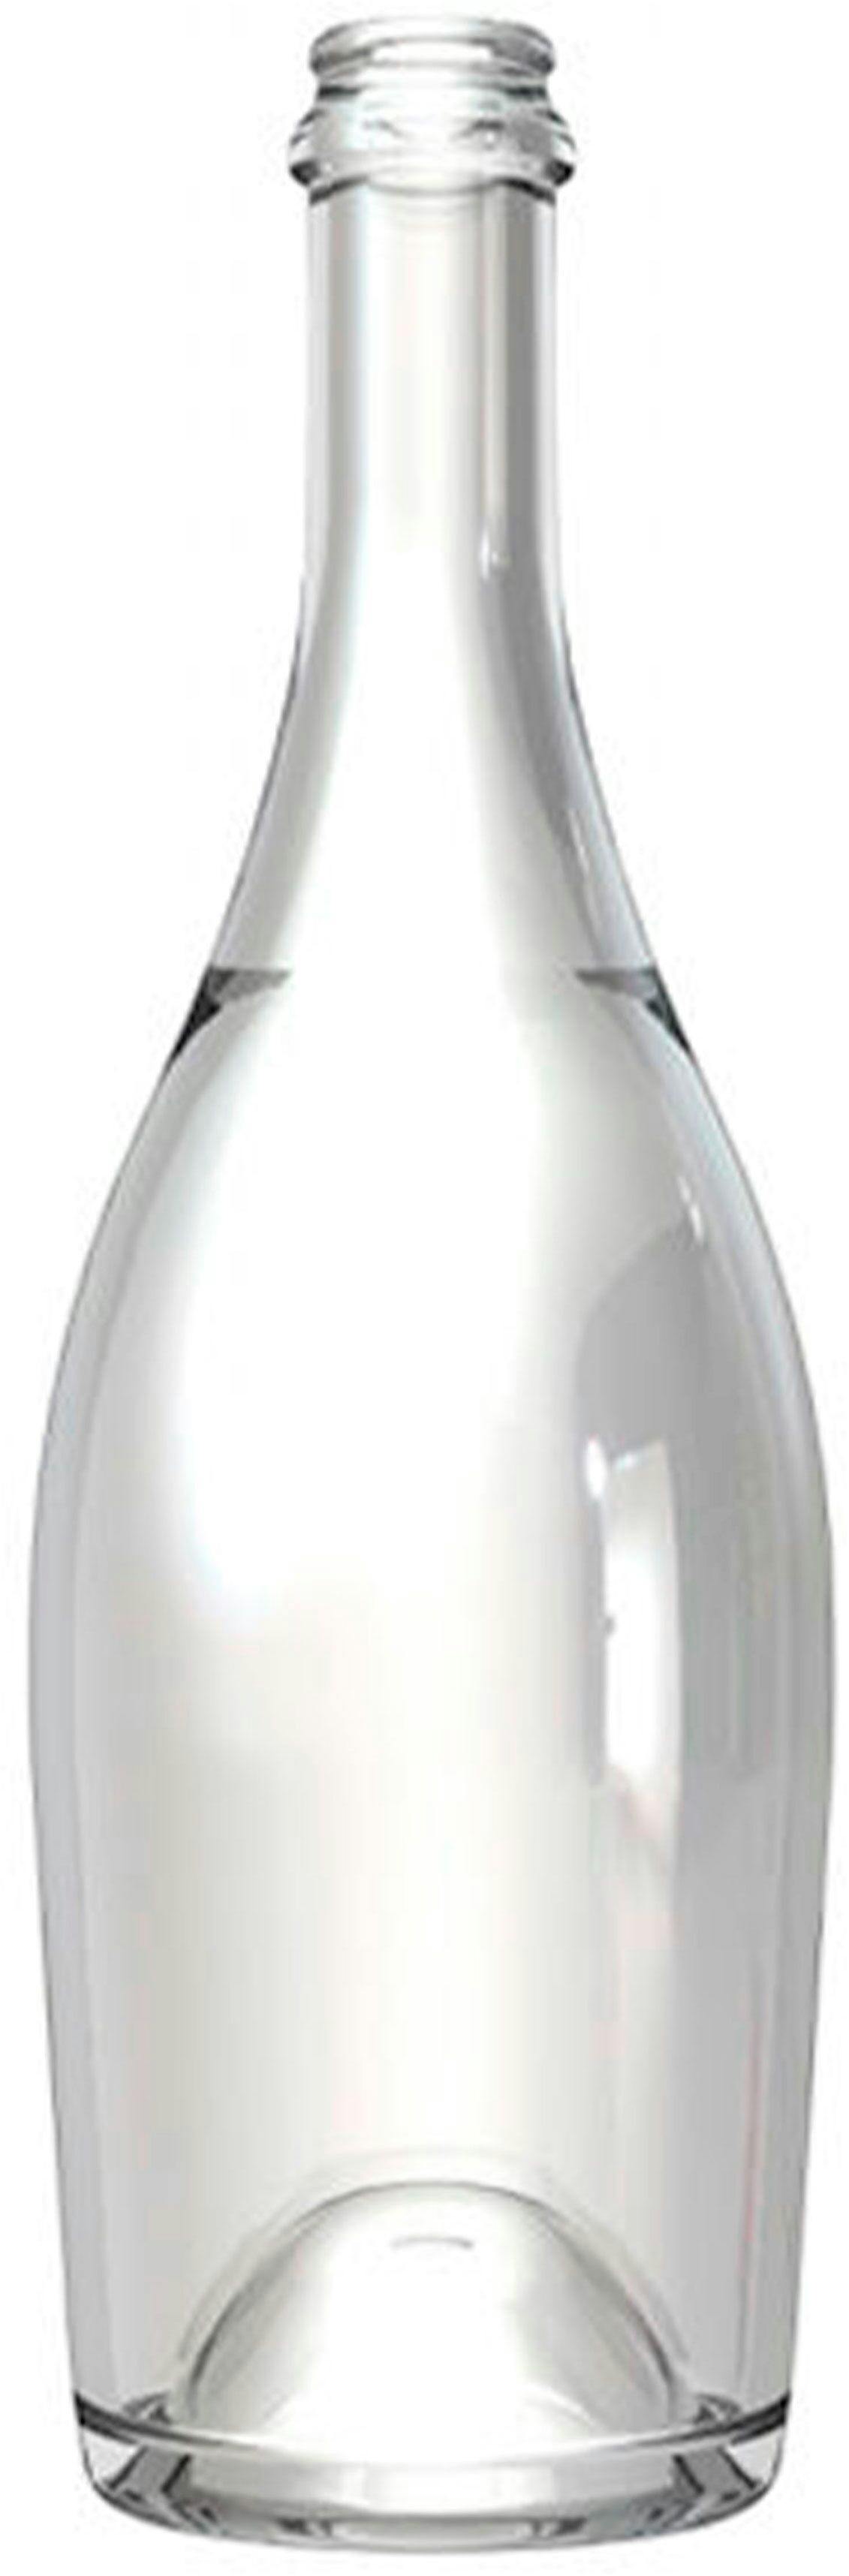 Bottle CHAMP  COLLIO 750 ml CoronaCrown 29 Extrashort - 18mm